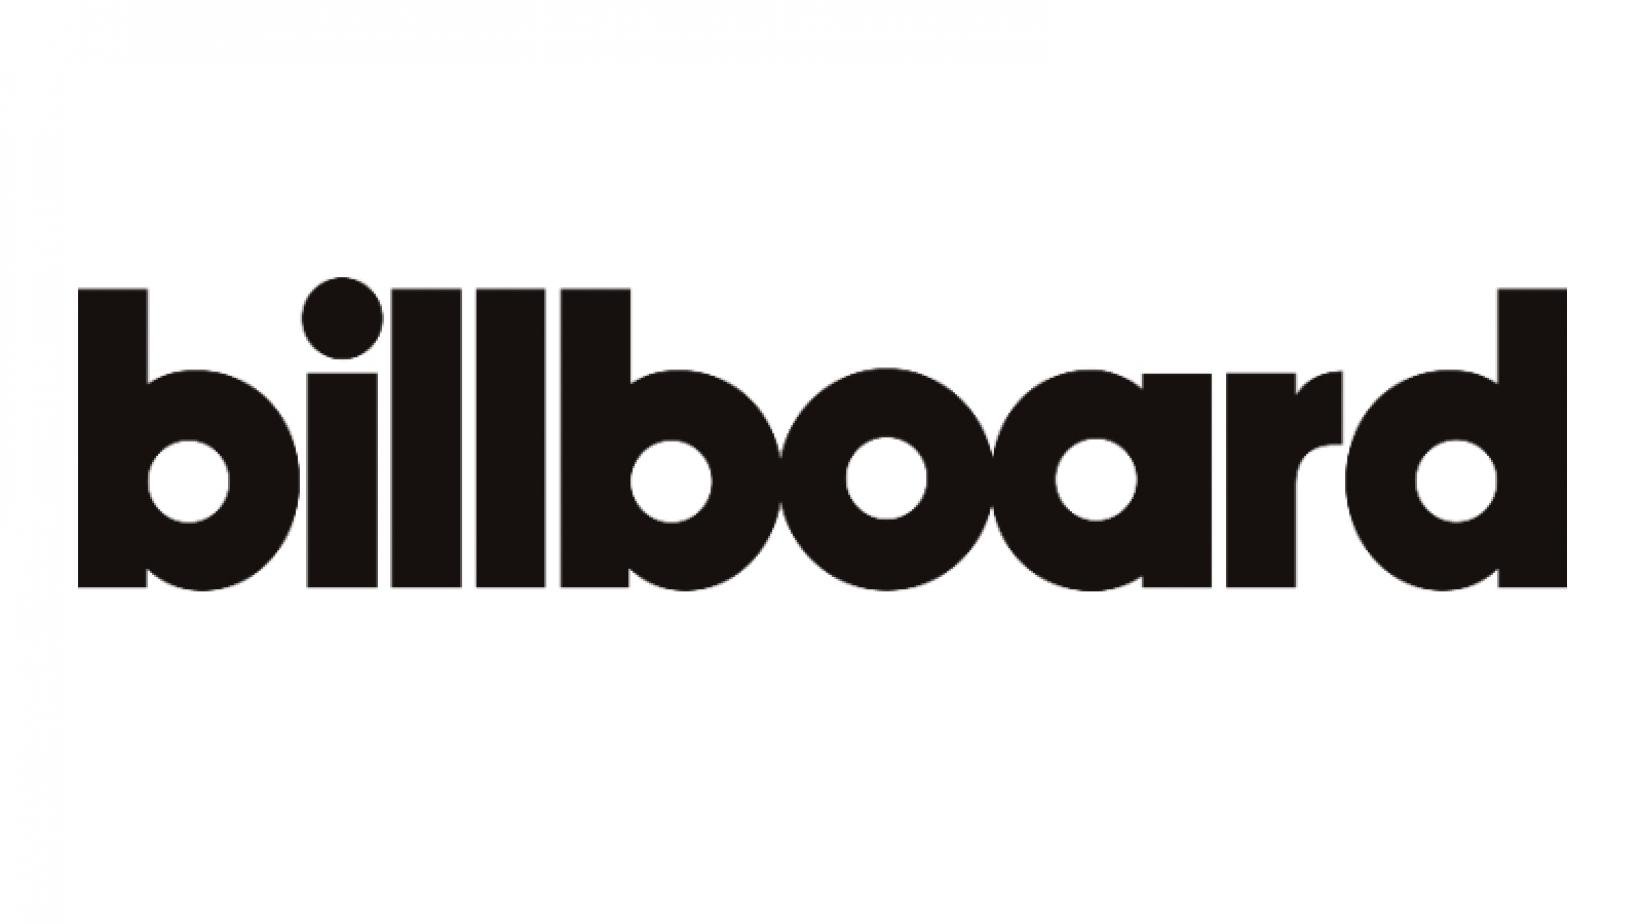 billboard-logo.jpg